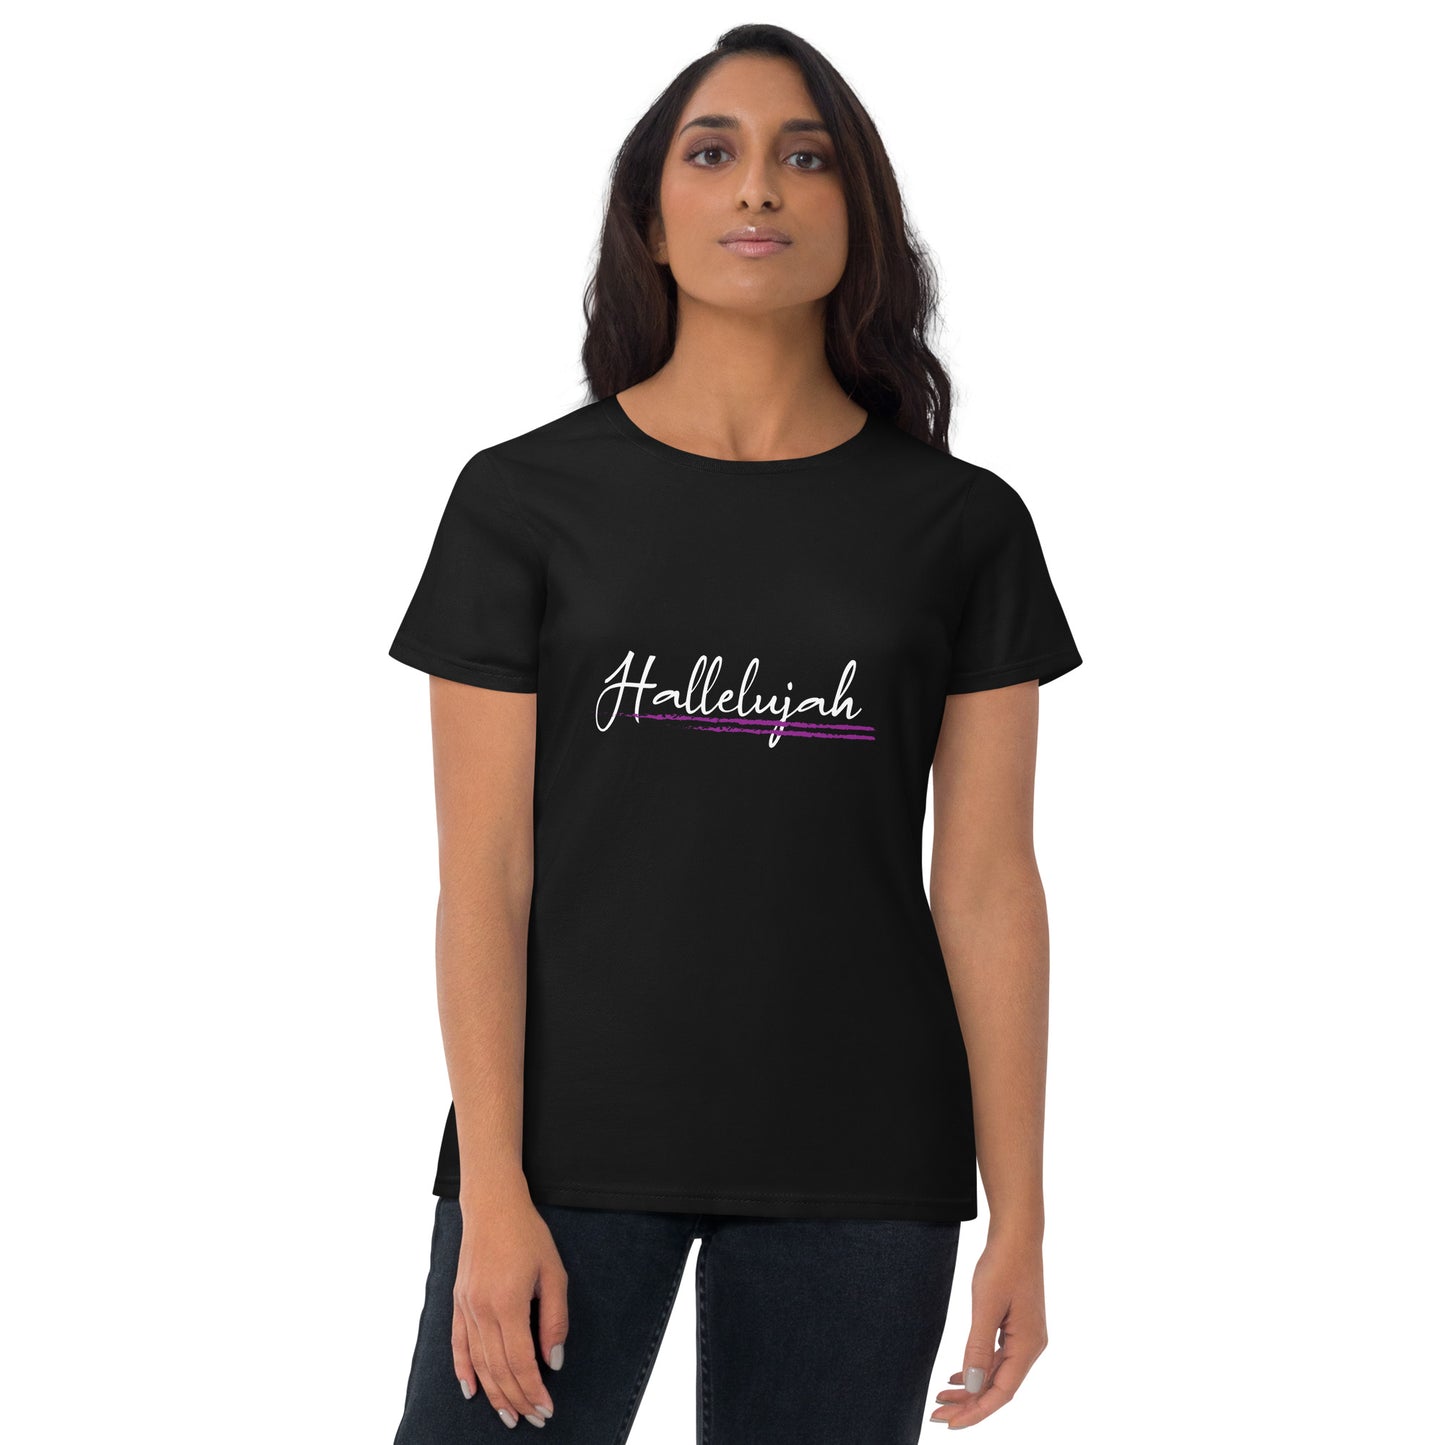 Hallelujah- Women's short sleeve t-shirt - Ladaitt Christian Store